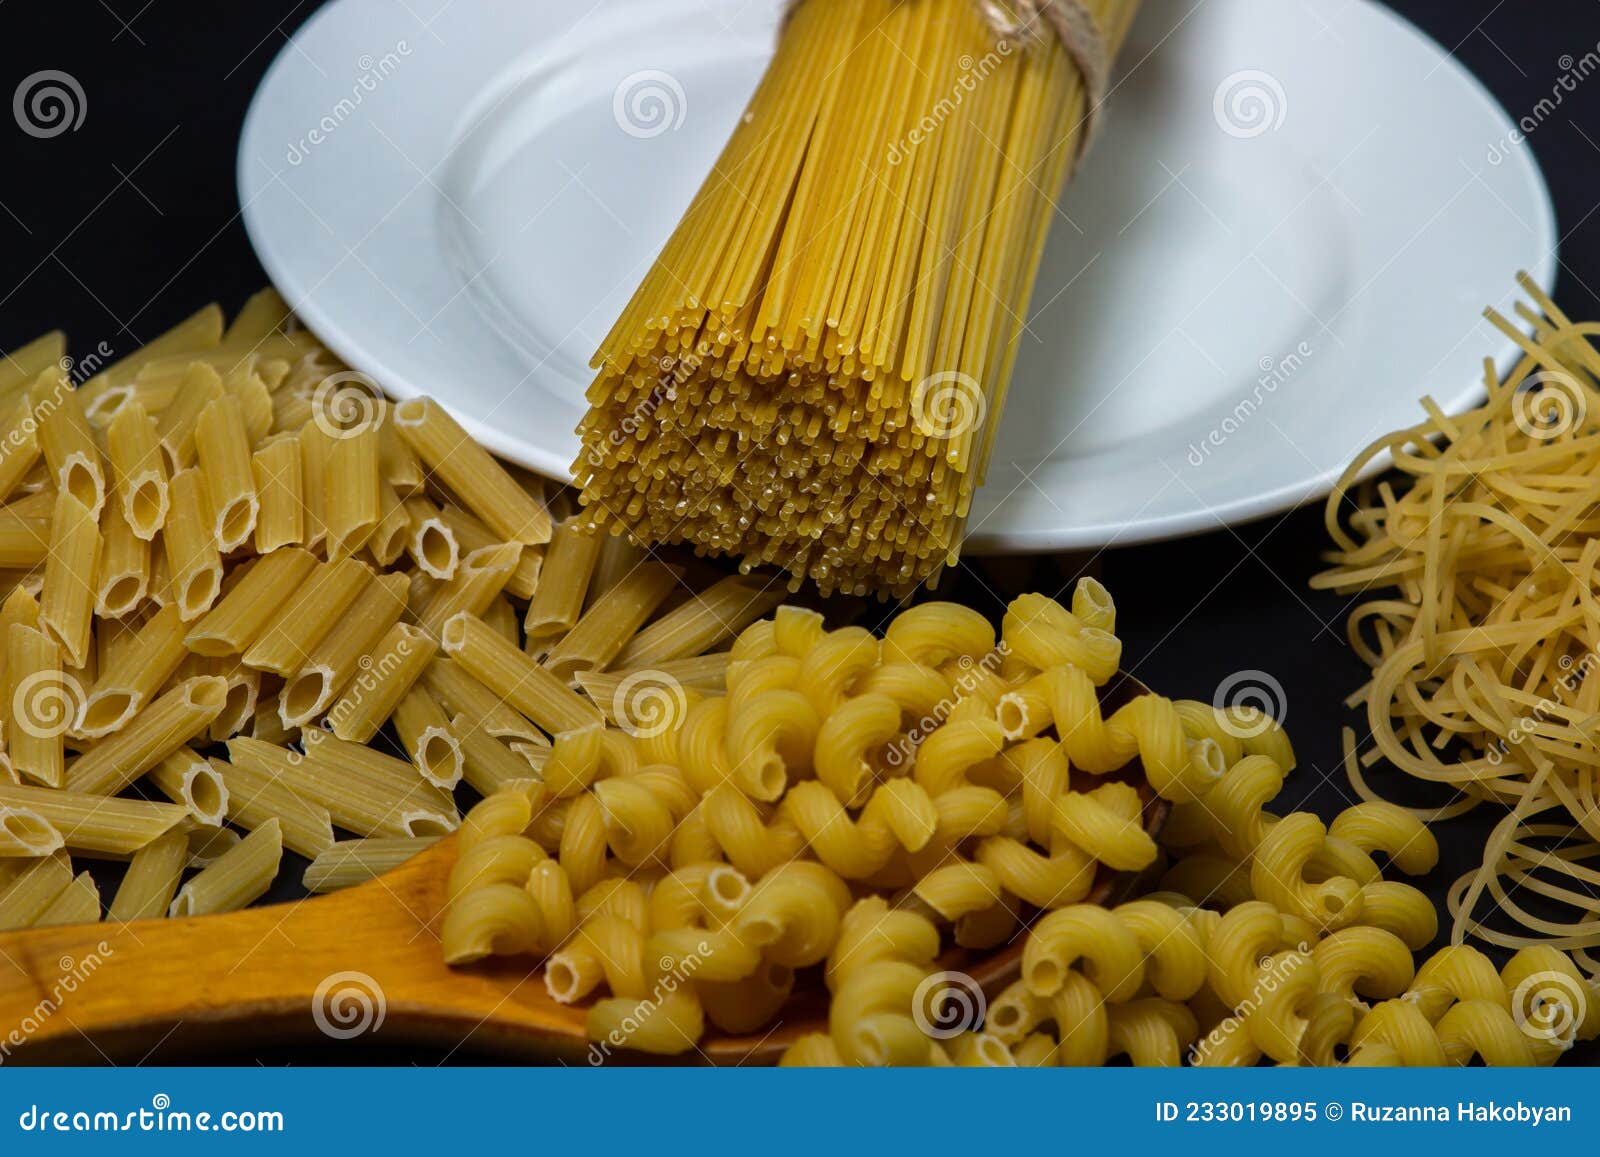 Free Photo  Various types of pasta on black